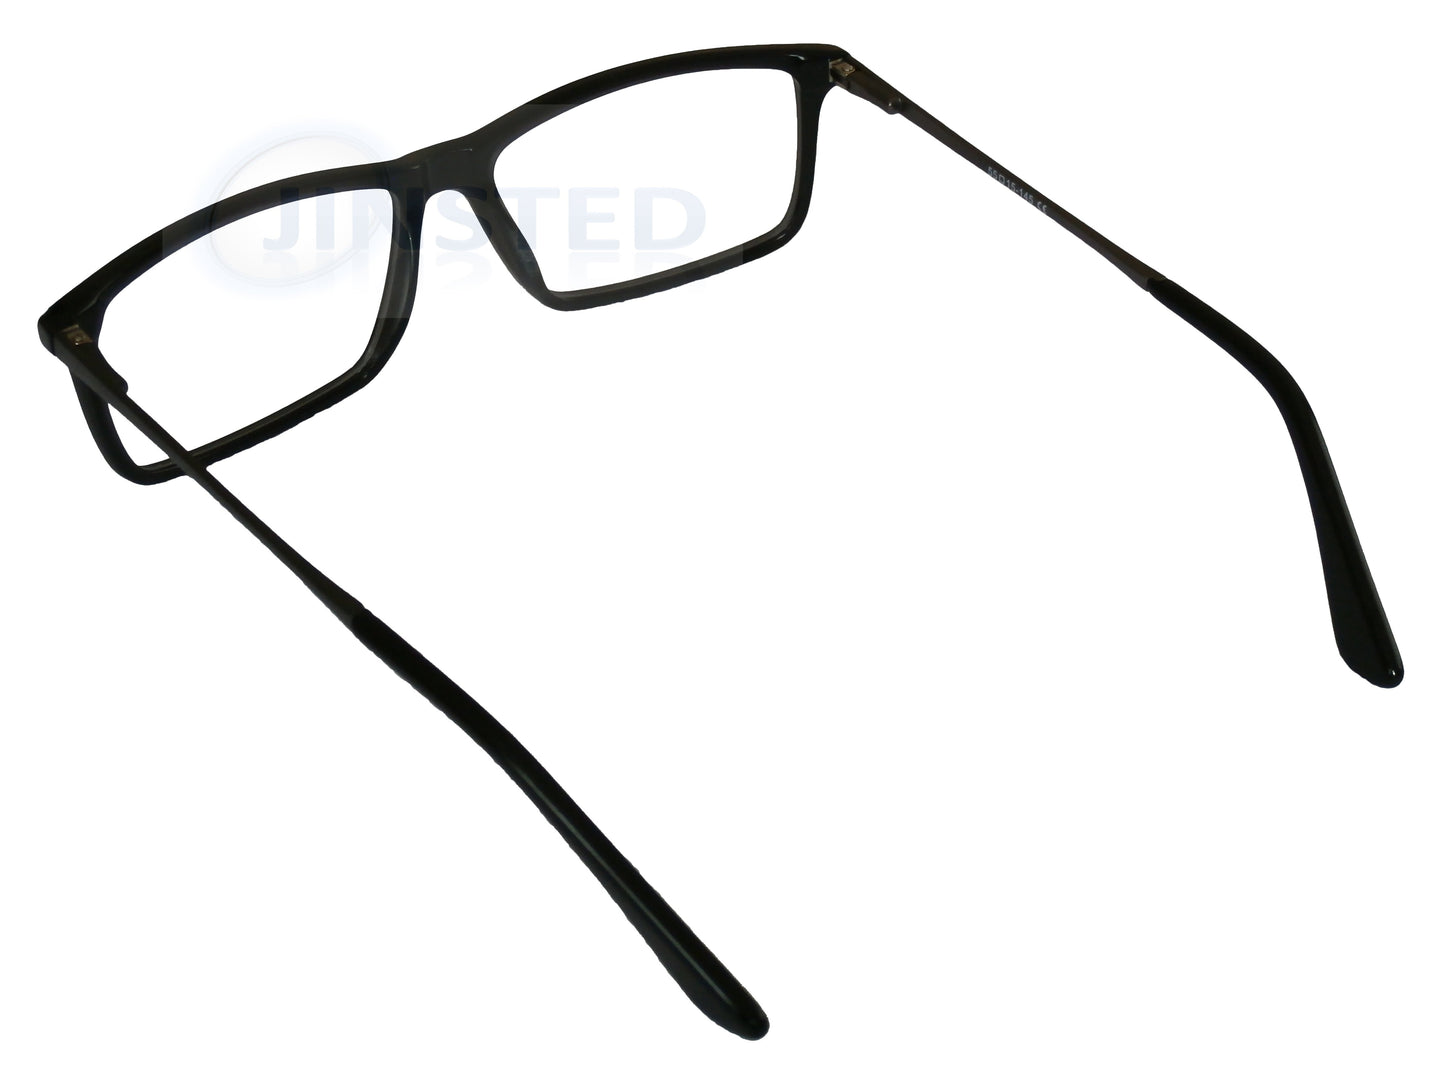 Glasses Frames, Luxury High Quality Black Swiss Designed Glasses Frames, Jinsted